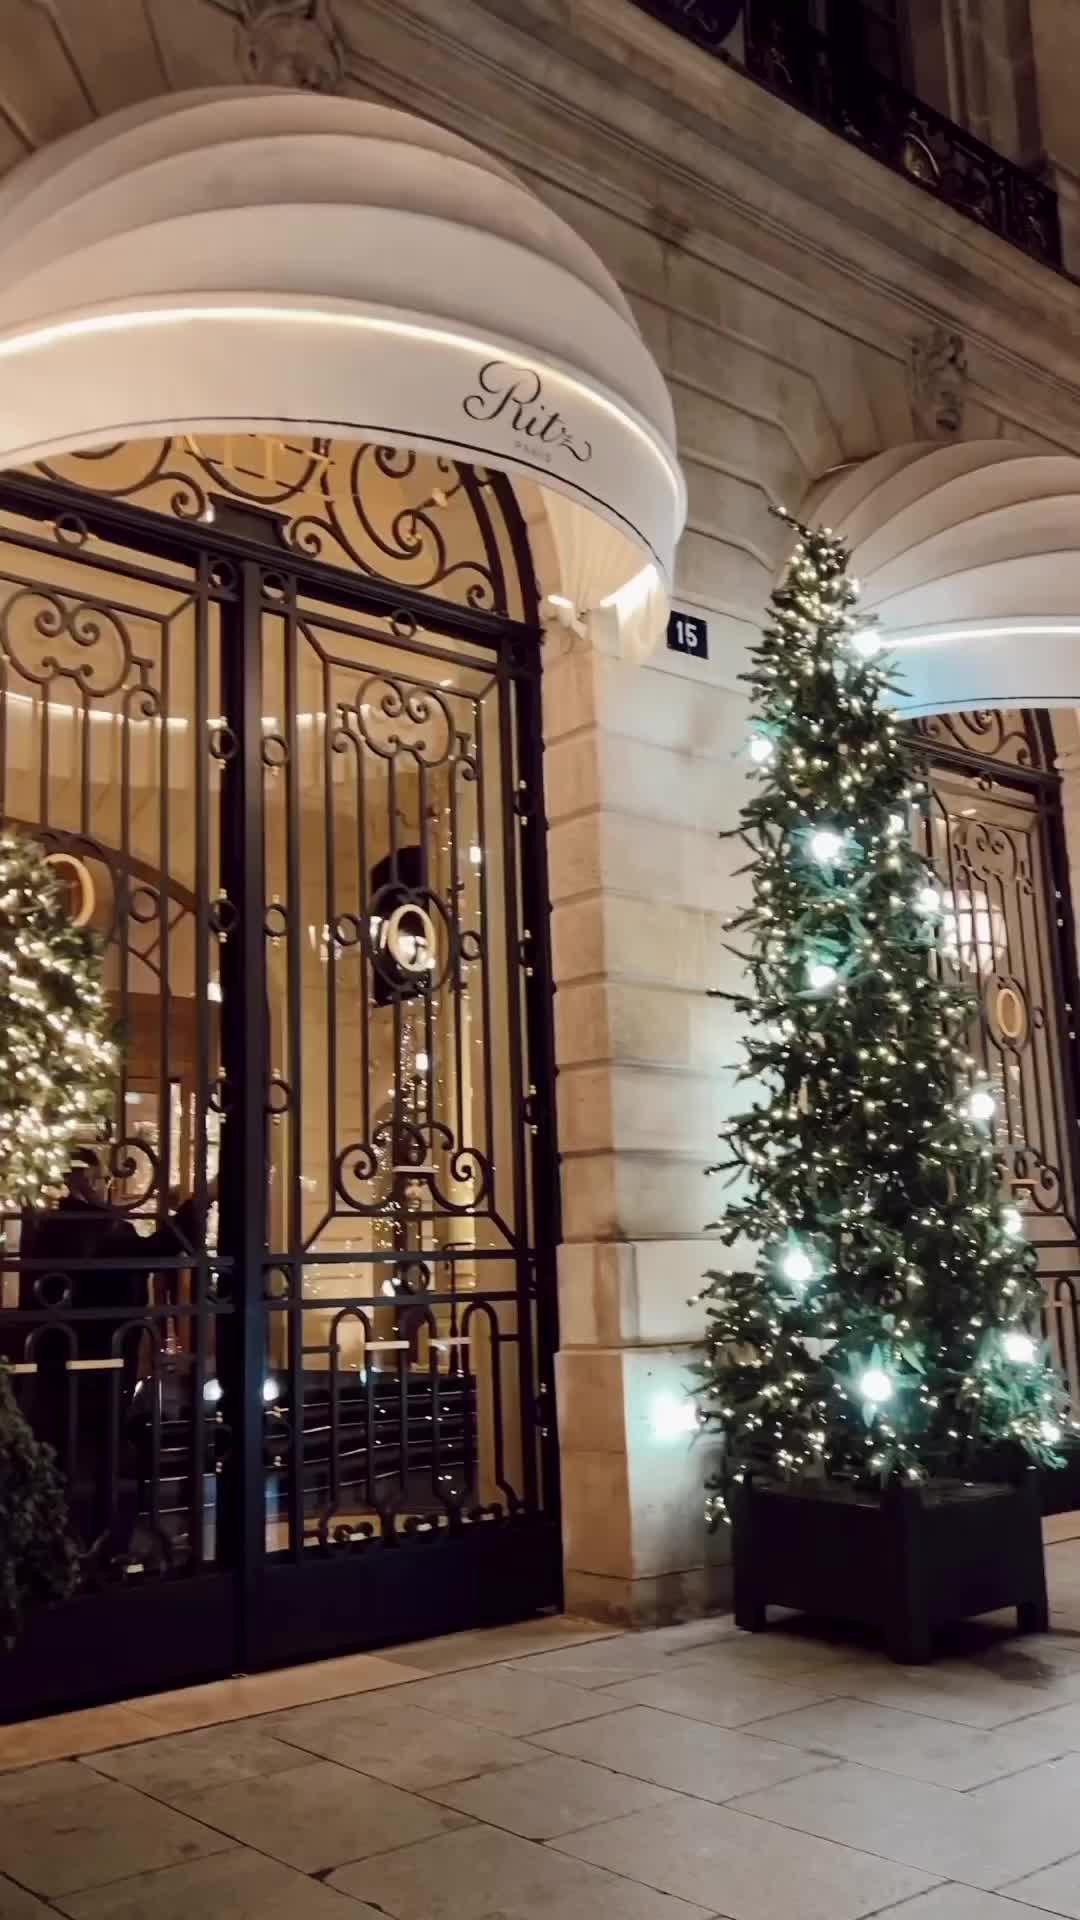 Merry Christmas from Ritz Paris: A Luxurious Celebration